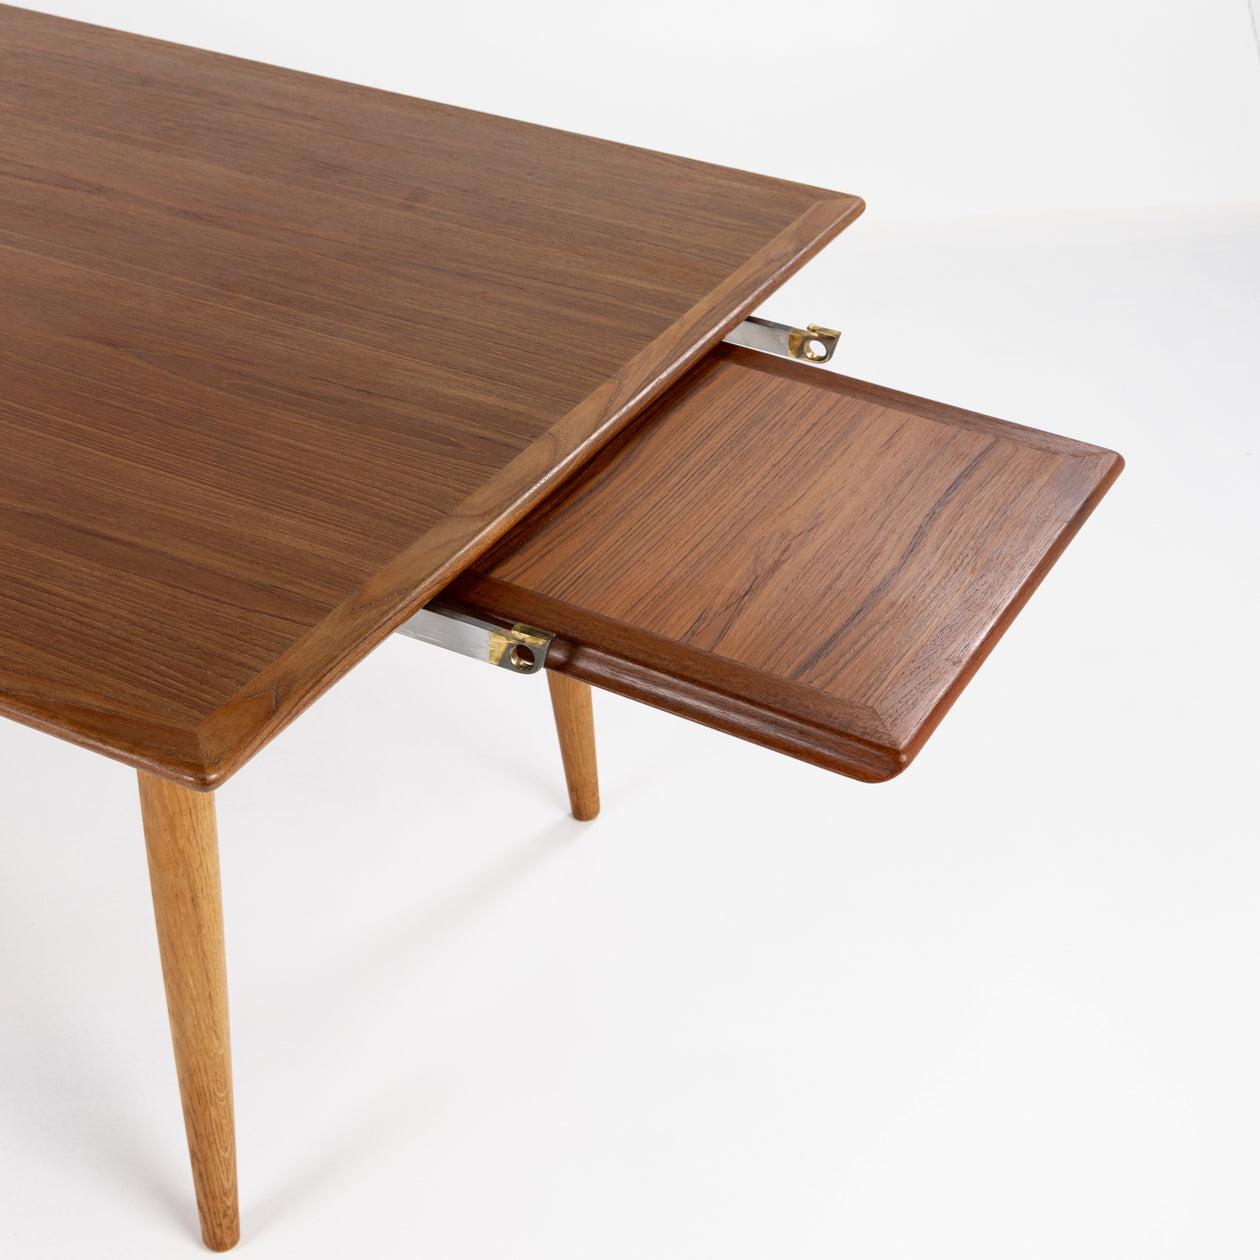 Patinated JH 570 - Rare teak dining table By Hans J. Wegner